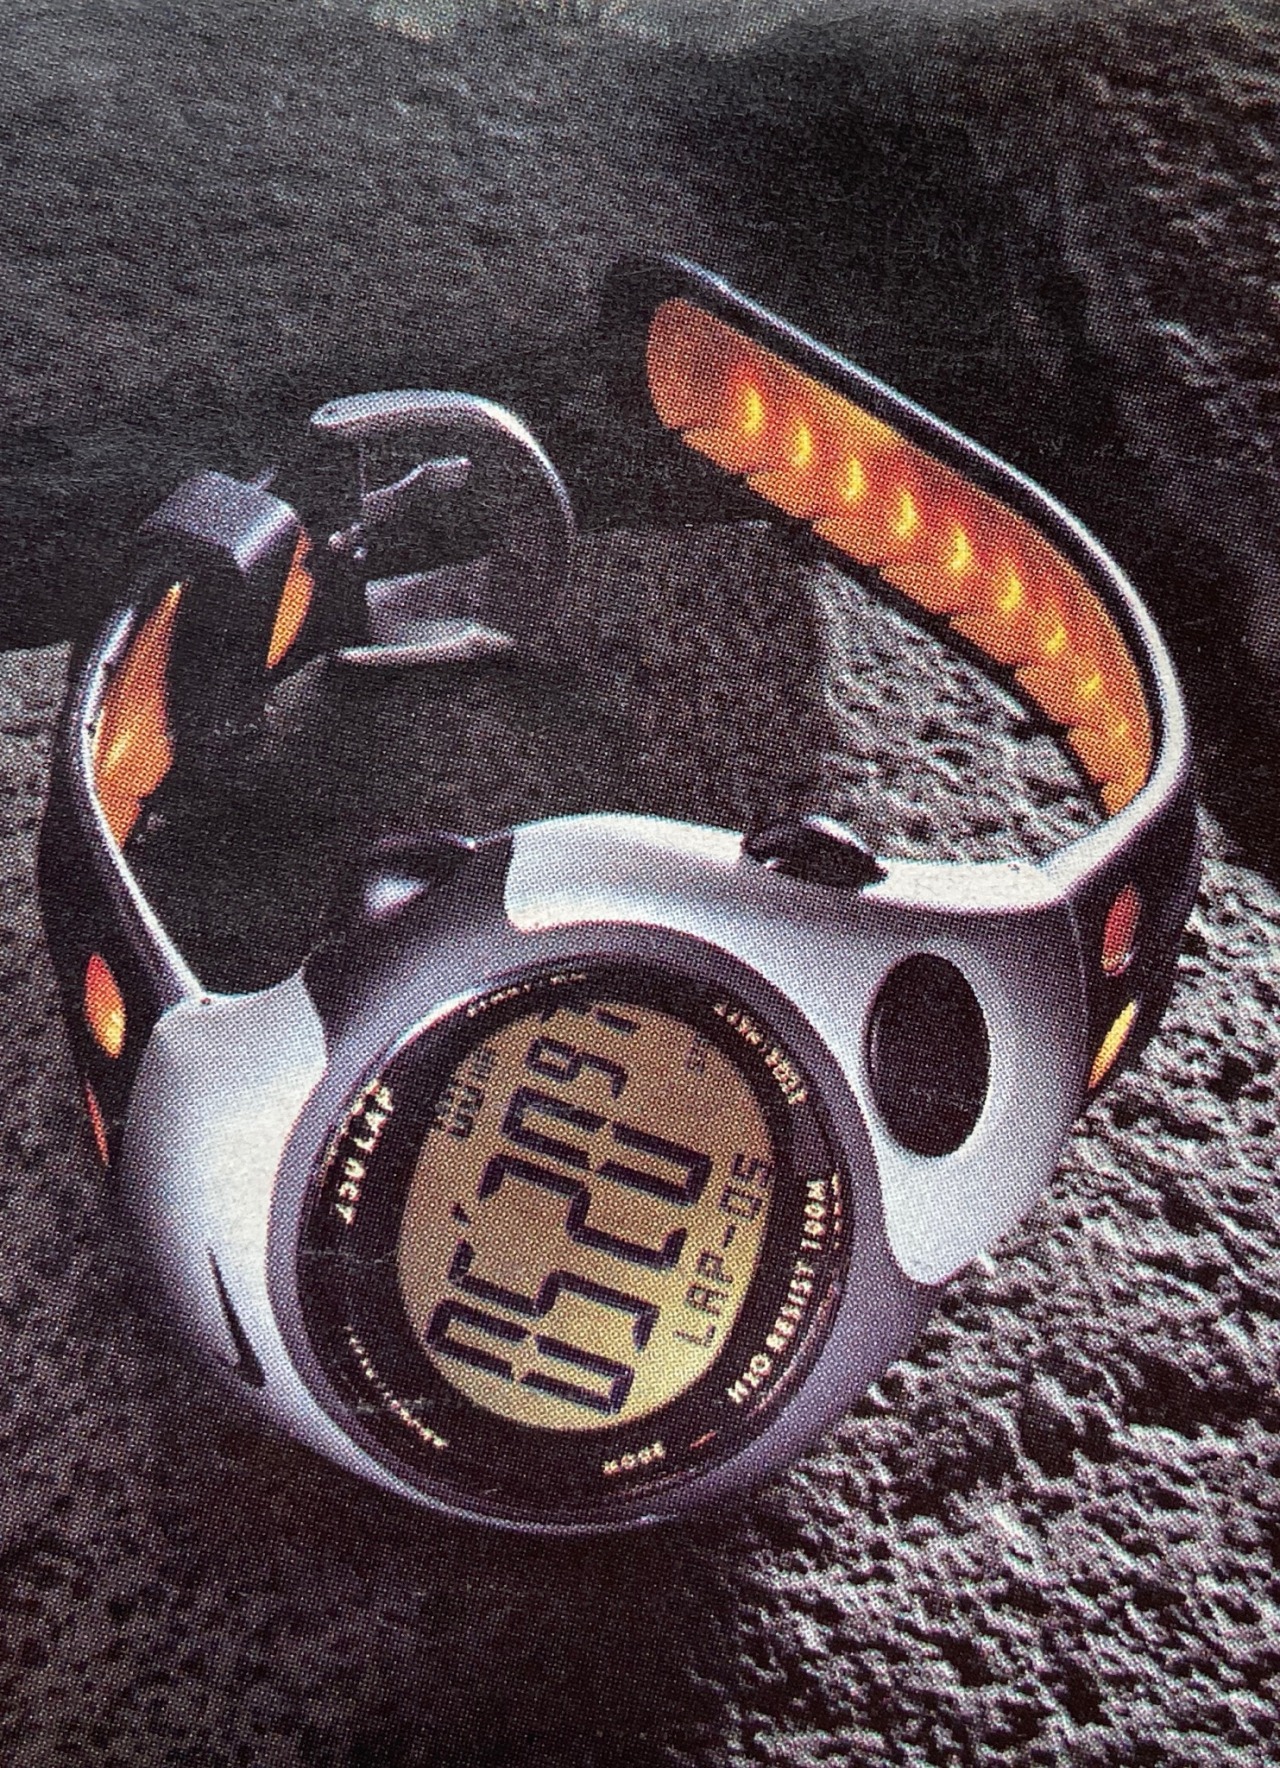 juego empeñar Cesta image therapy — Nike: Triax 250 Running Watch (1998)